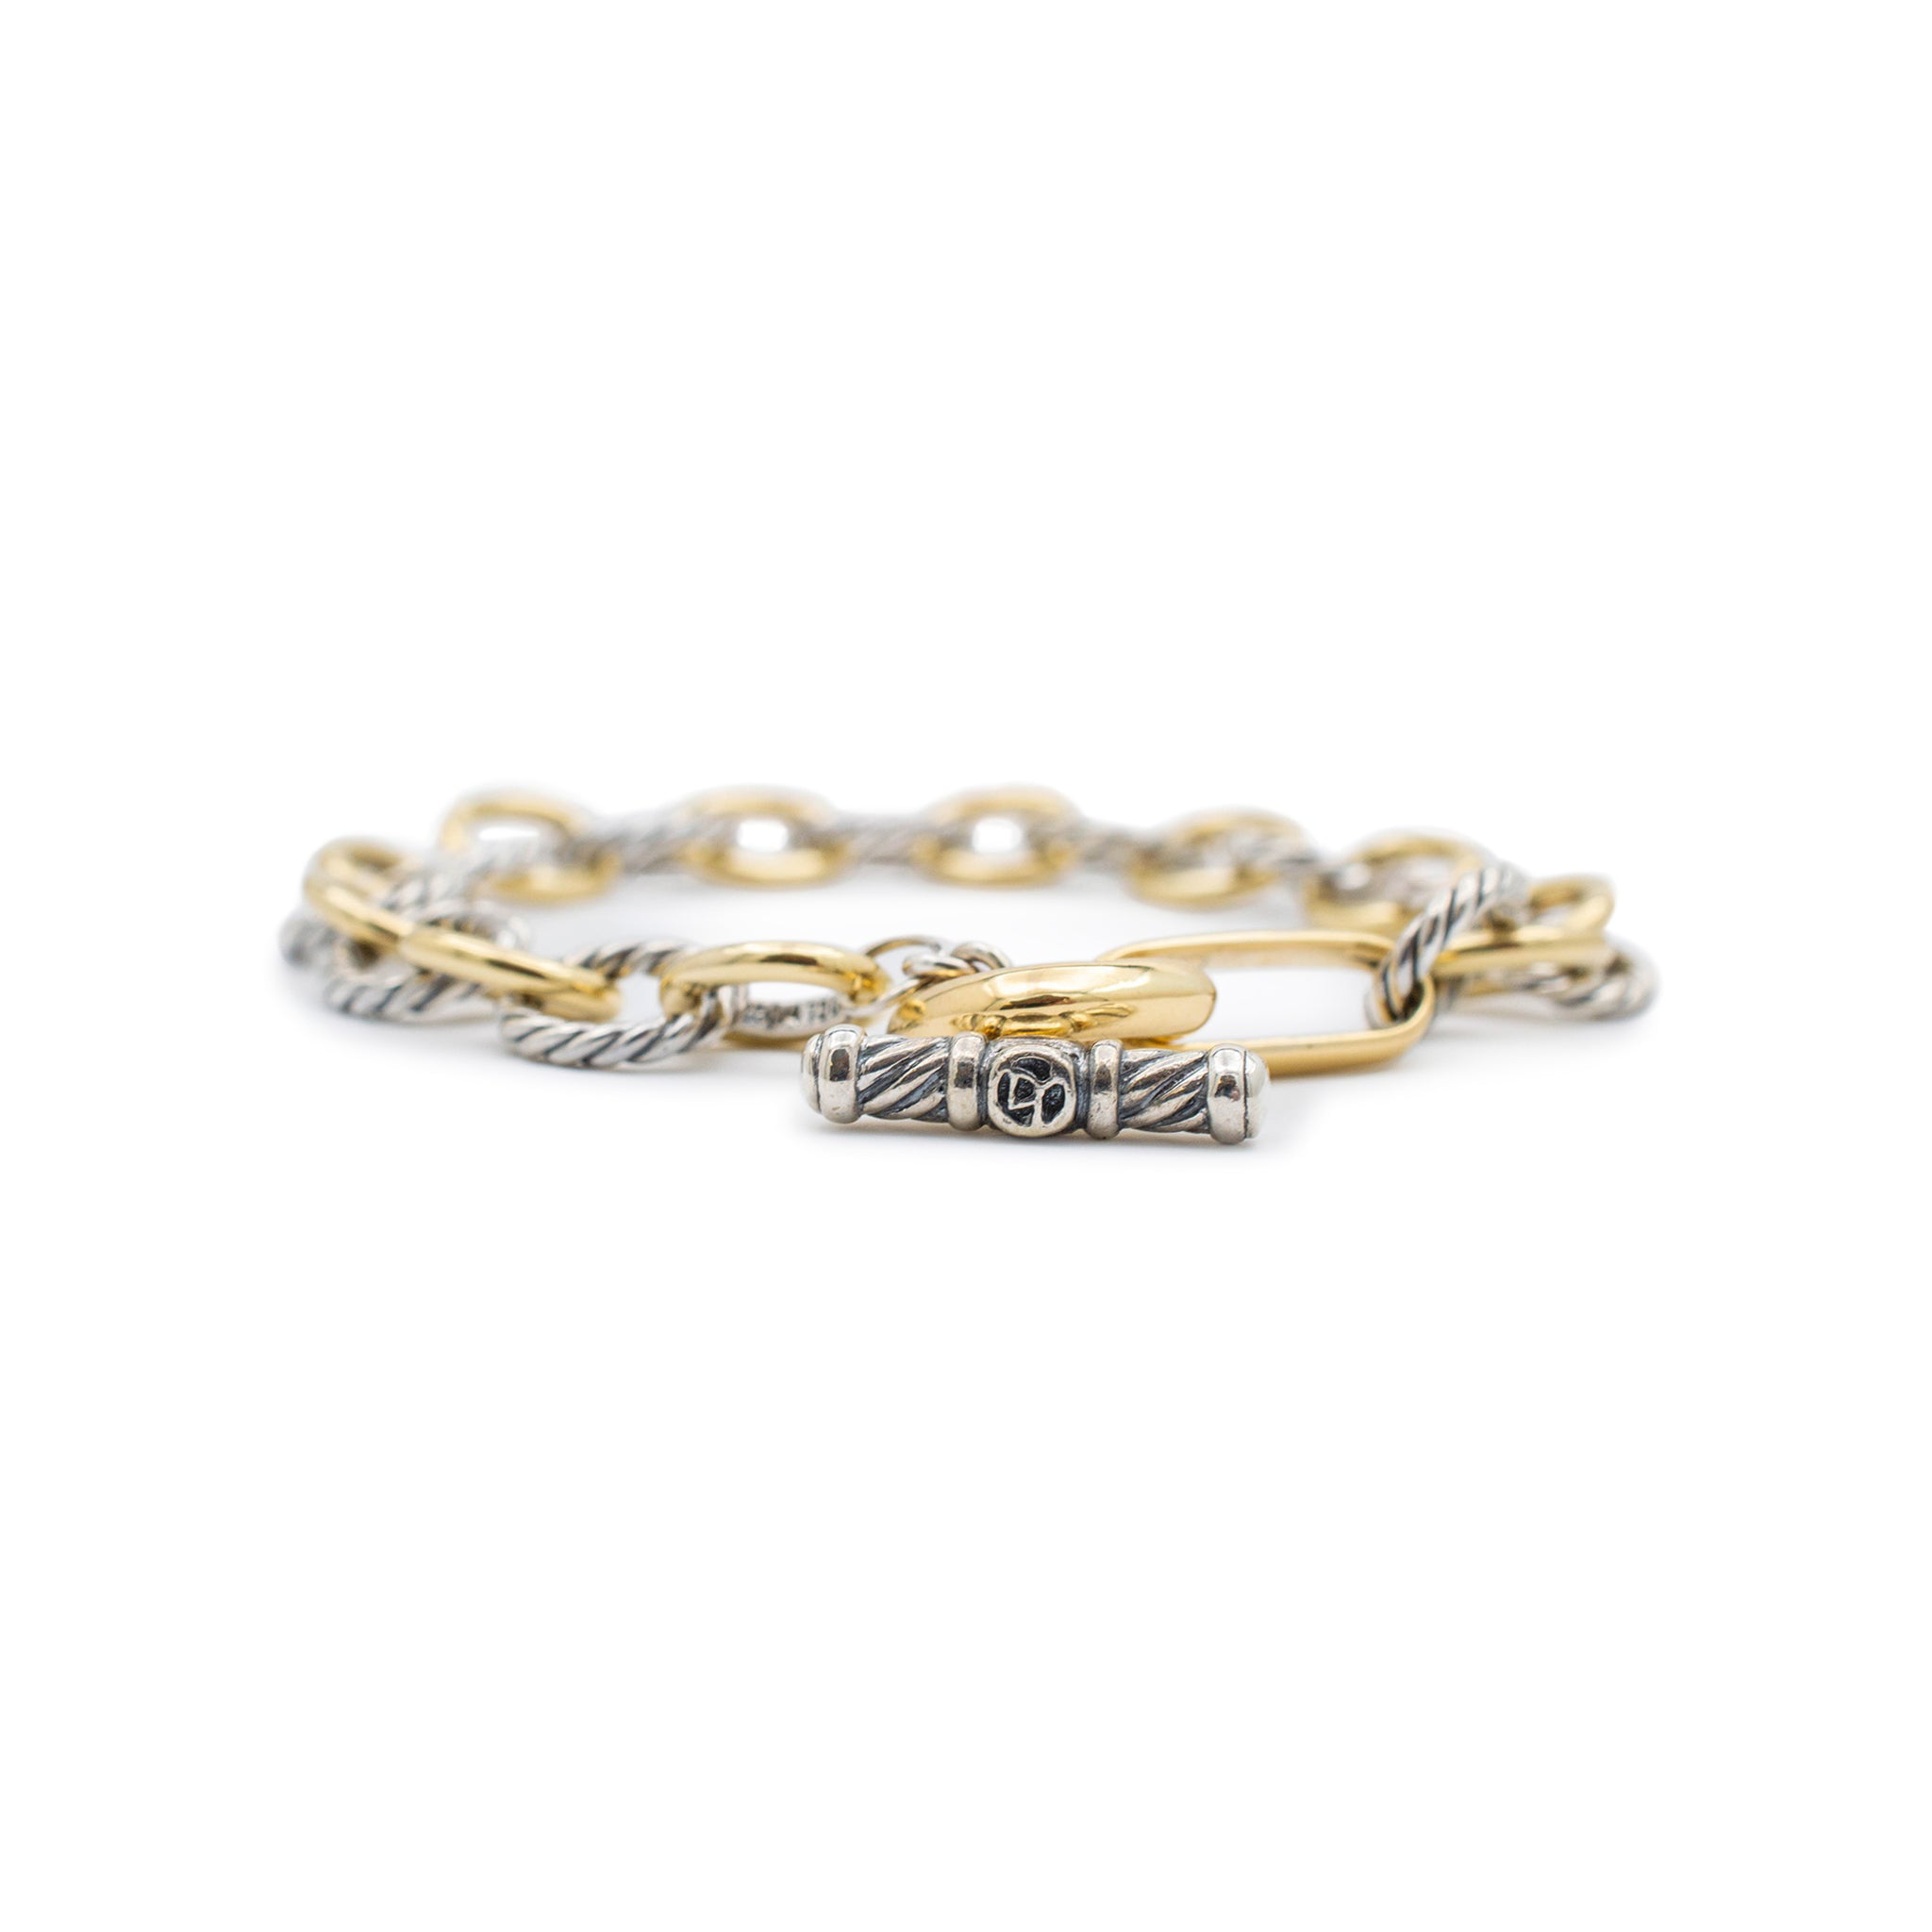 David Yurman Oval Link Chain Bracelet in Sterling Silver with 18K Yellow Gold, 10mm Women's Size 8 IN